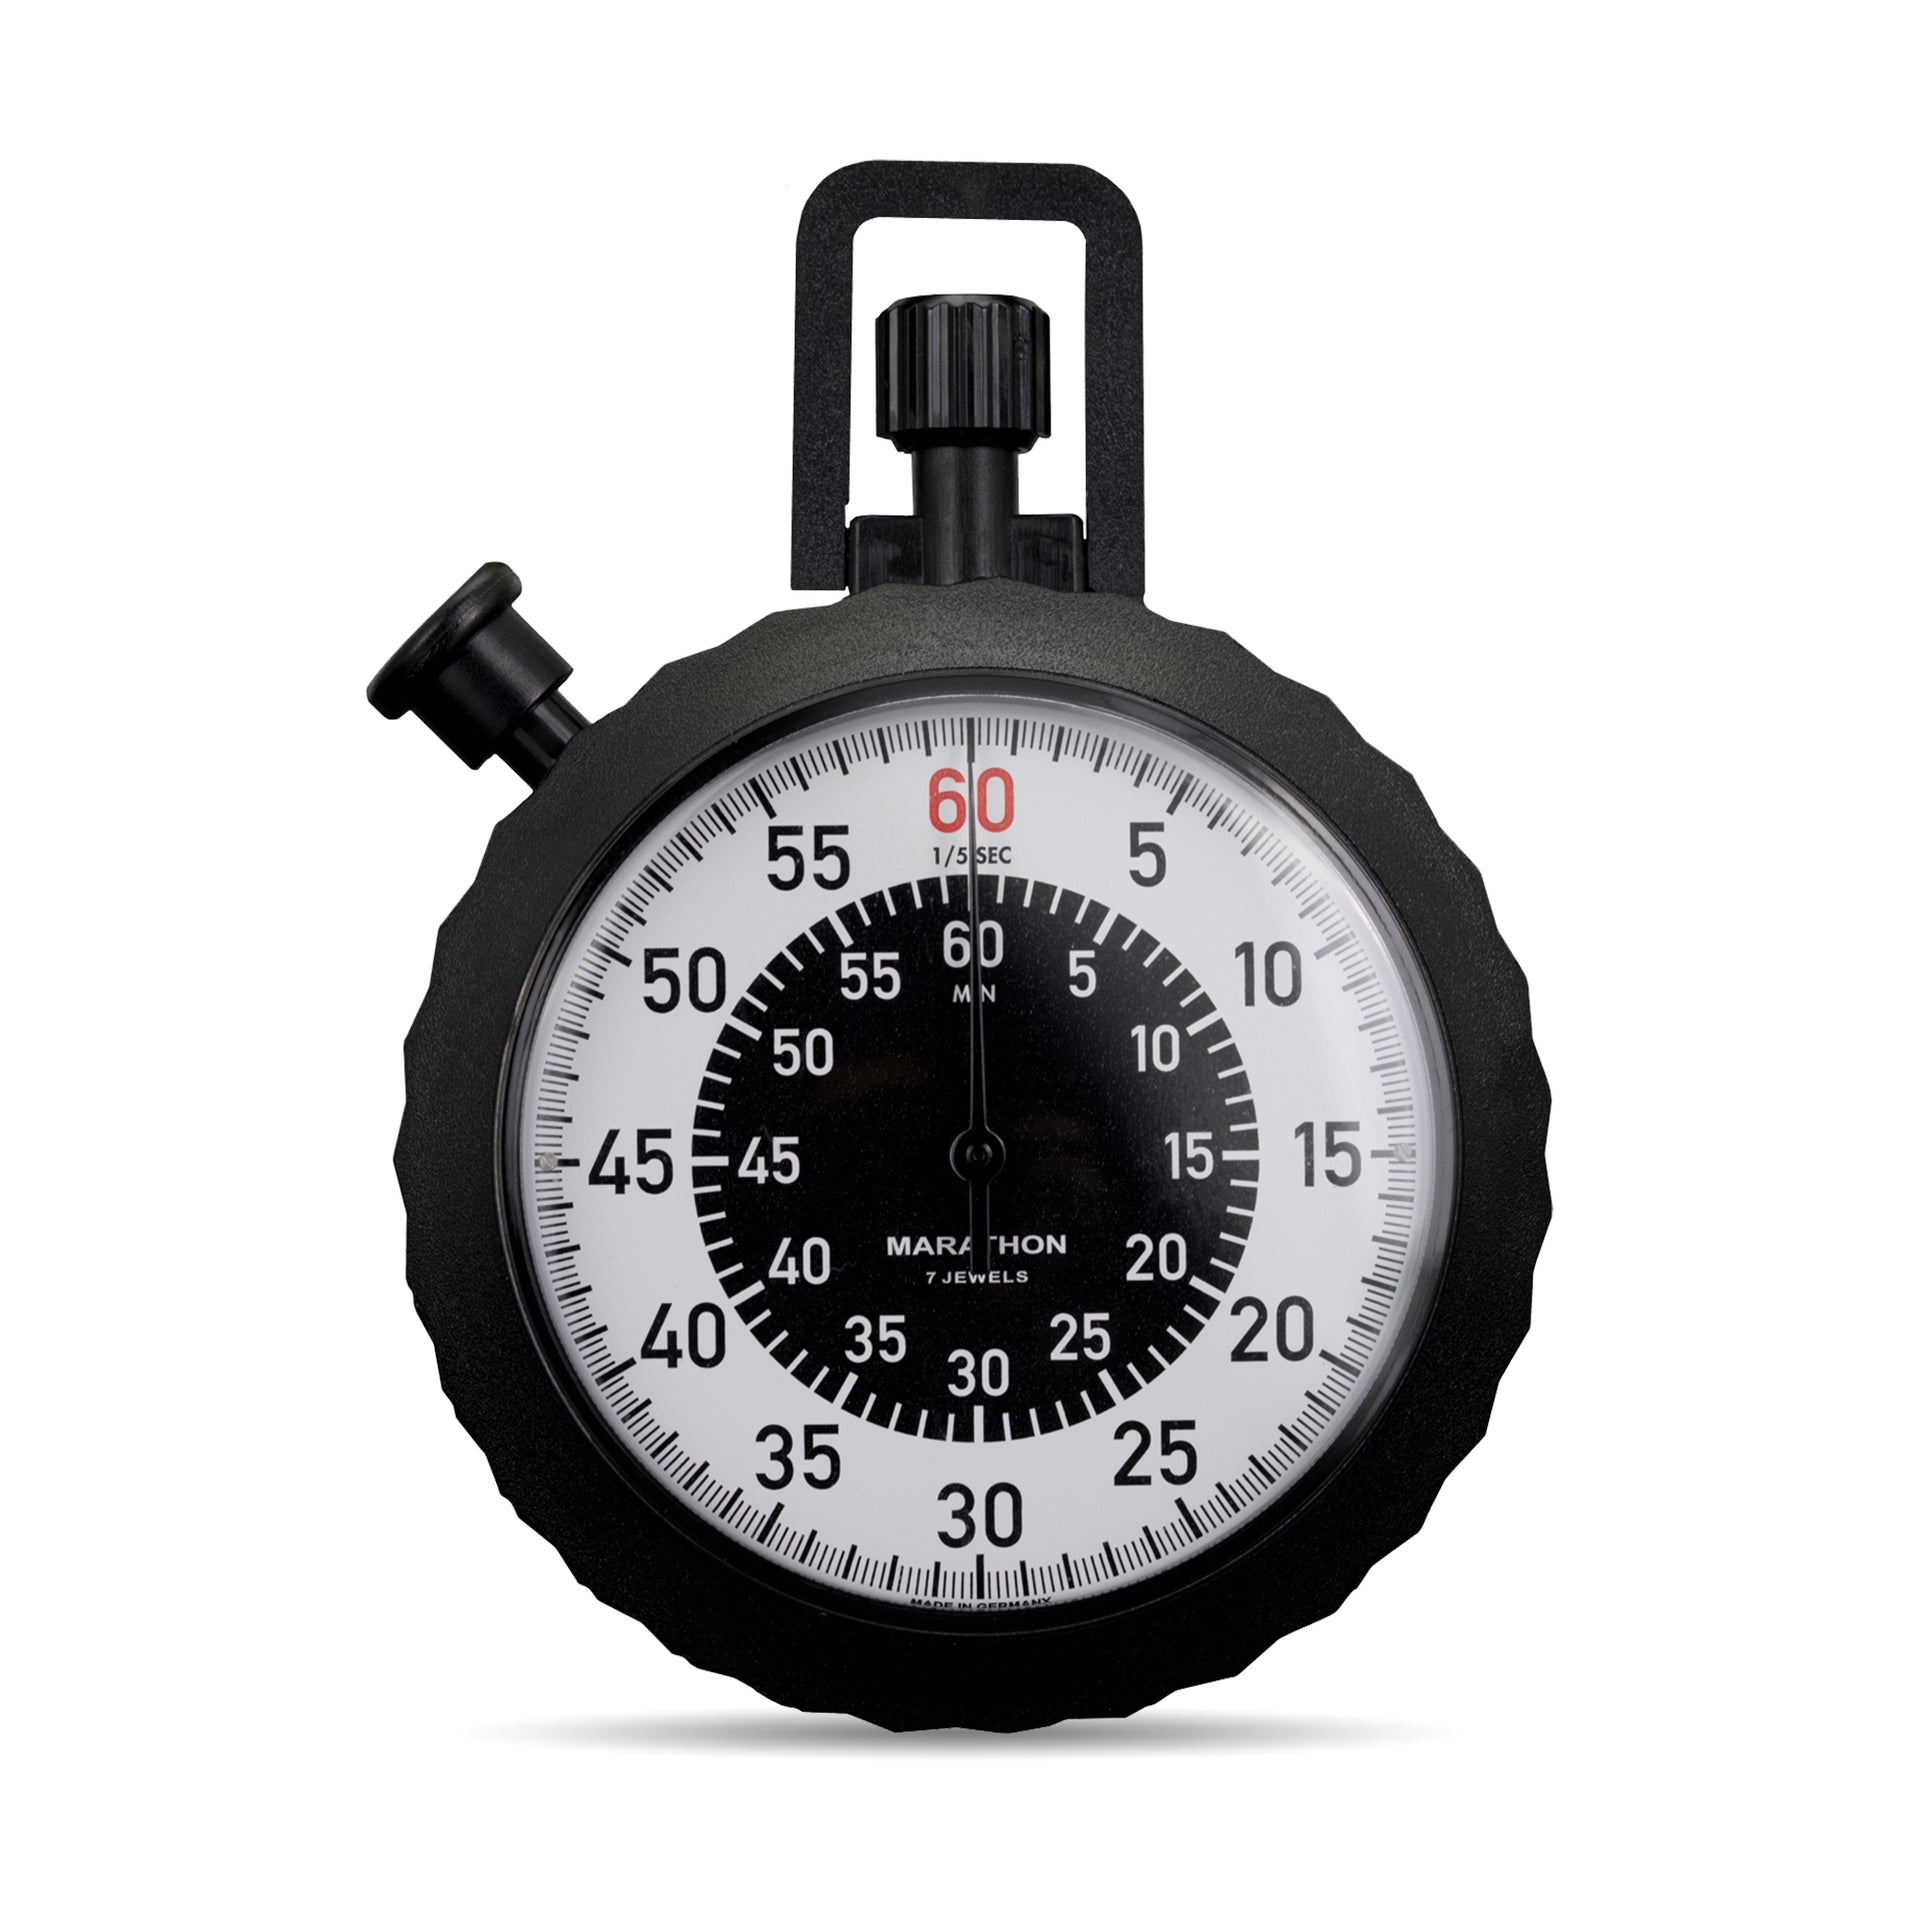 ADANAC 7000 Professional Stopwatch Timer - Marathon Watch Company